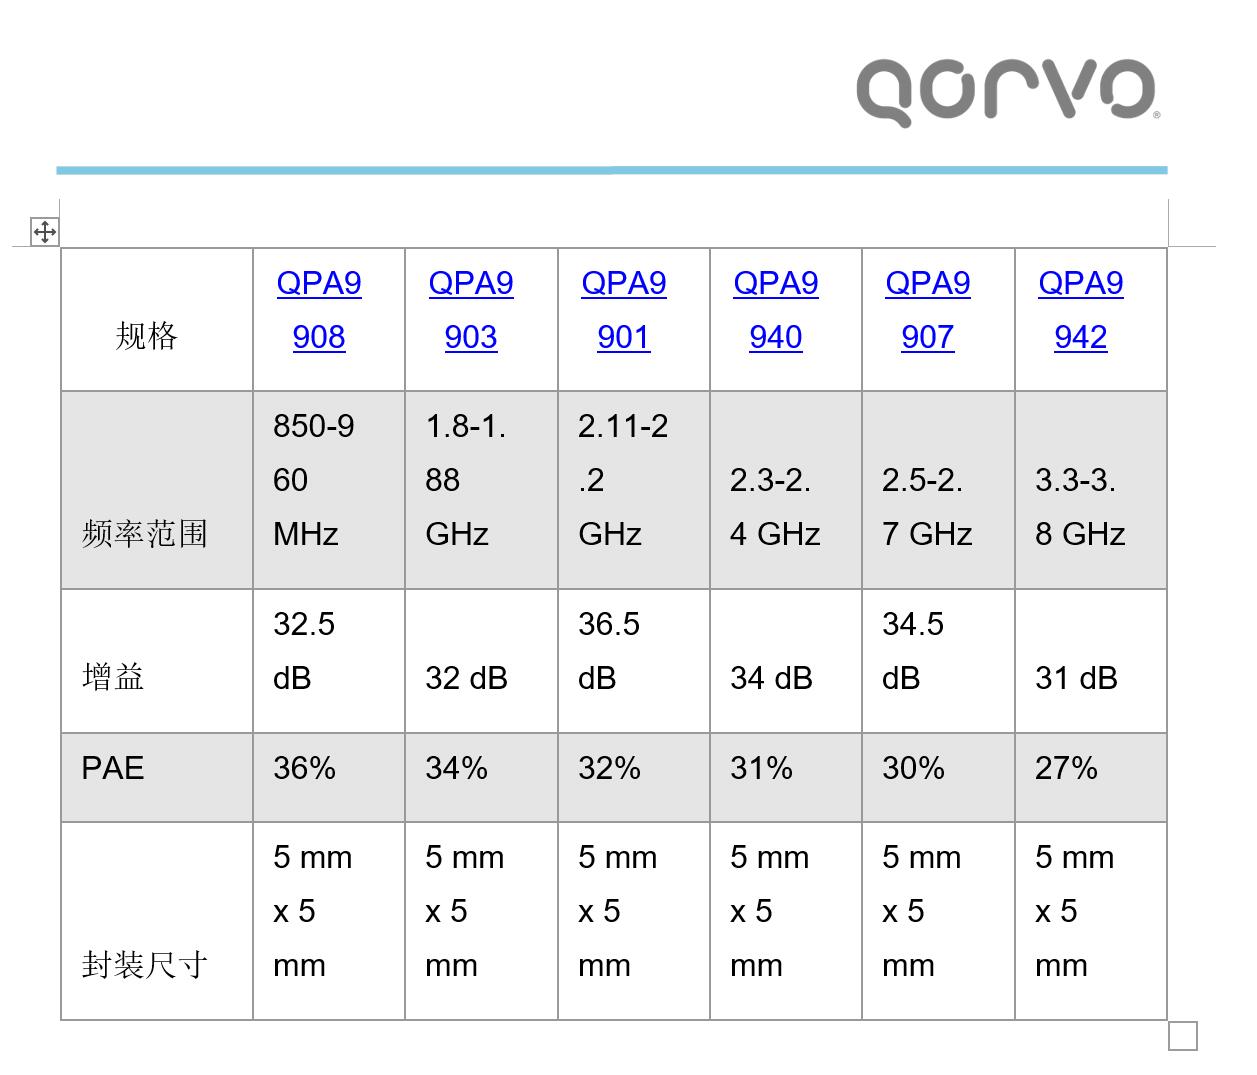 Qorvo ®推出面向 5G 小基站网络的高效功率放大器系列产品